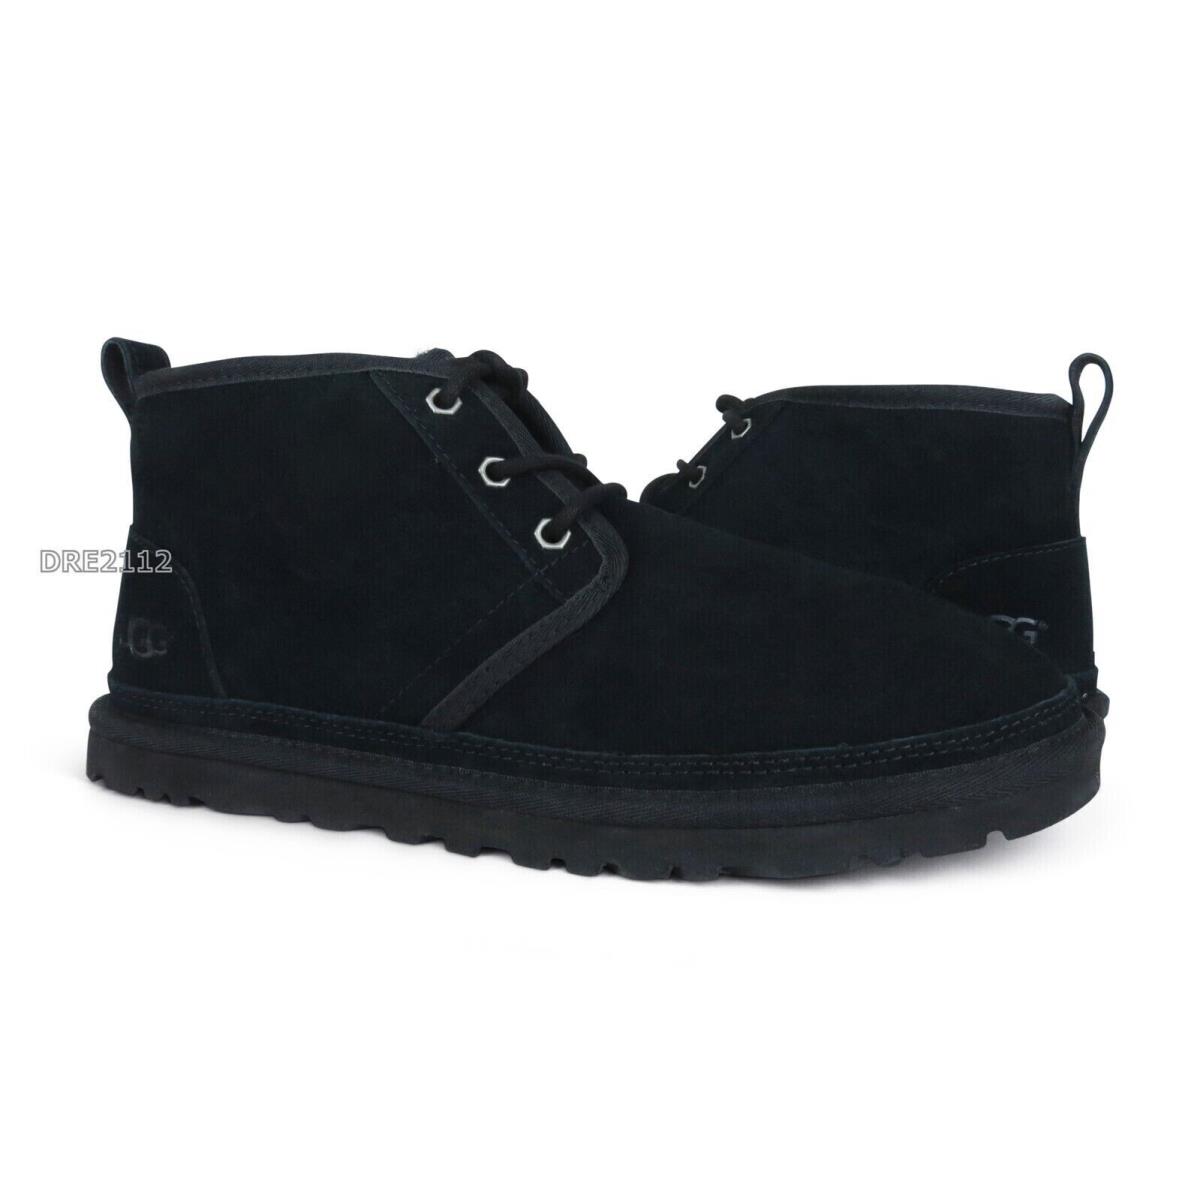 Ugg Neumel Black Suede Fur Shoes Womens Size 9 -nib